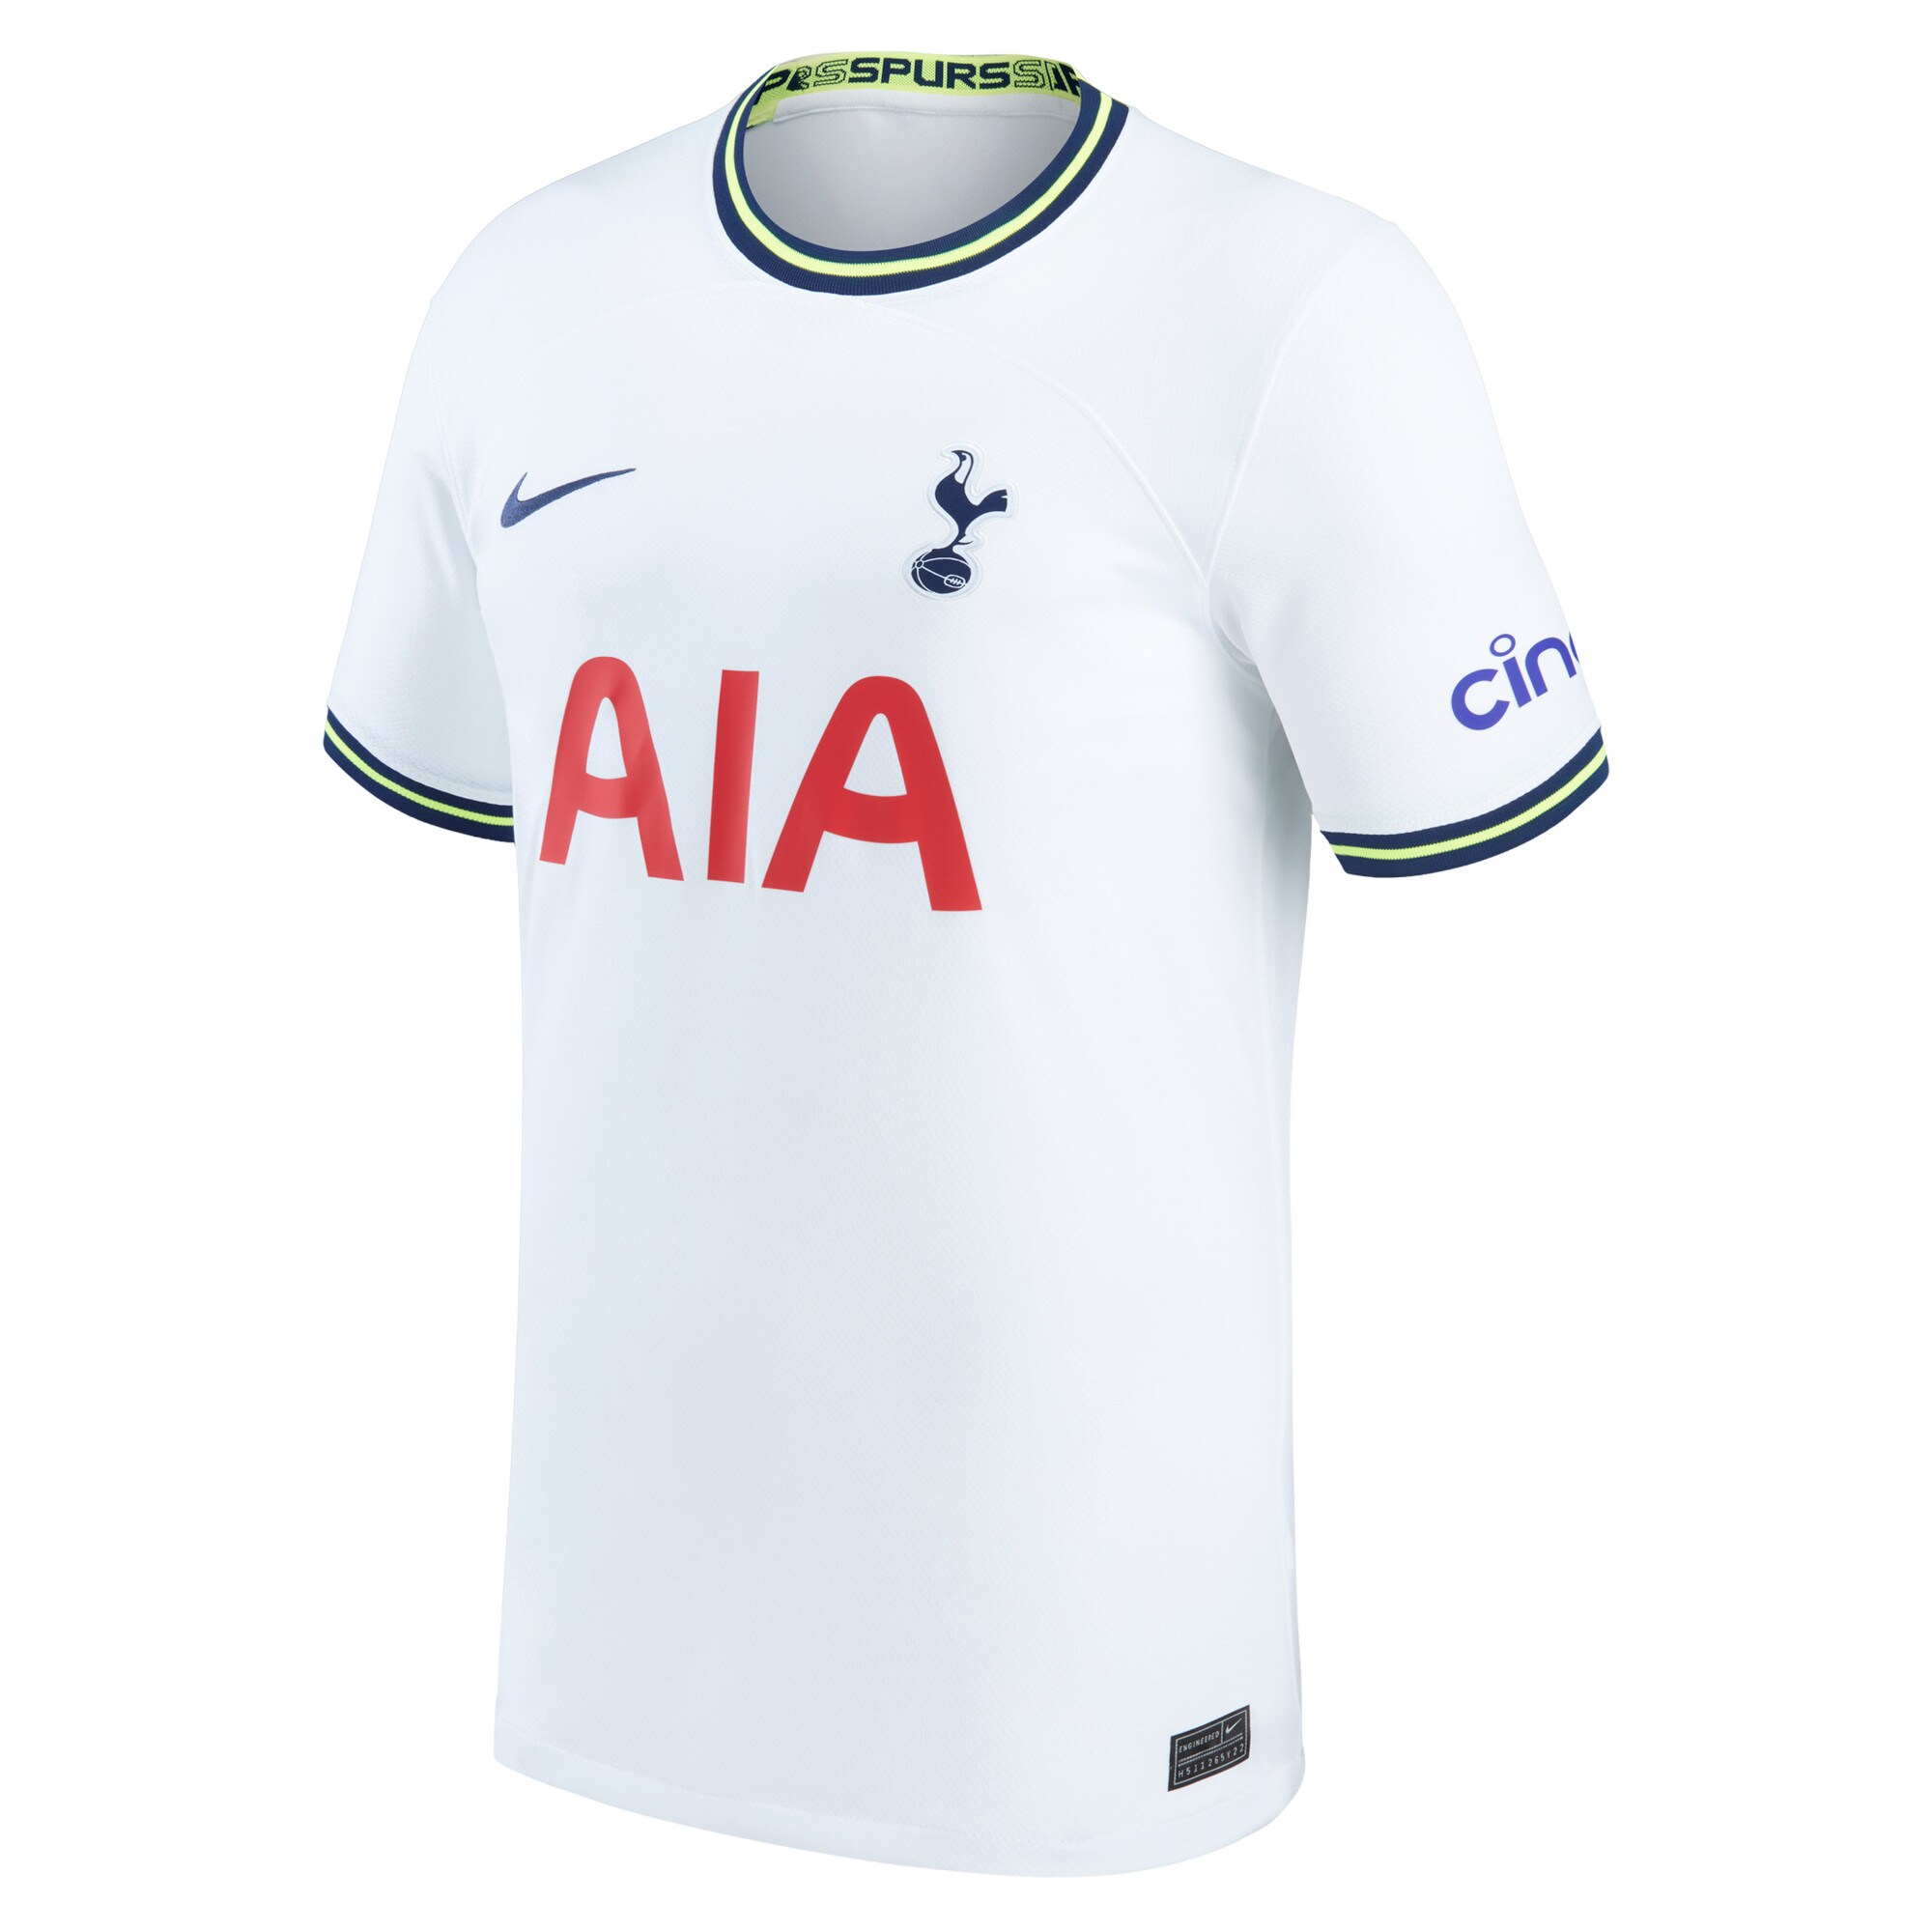 Tottenham Hotspur Home Stadium Shirt 2022-2023 with Son 7 printing